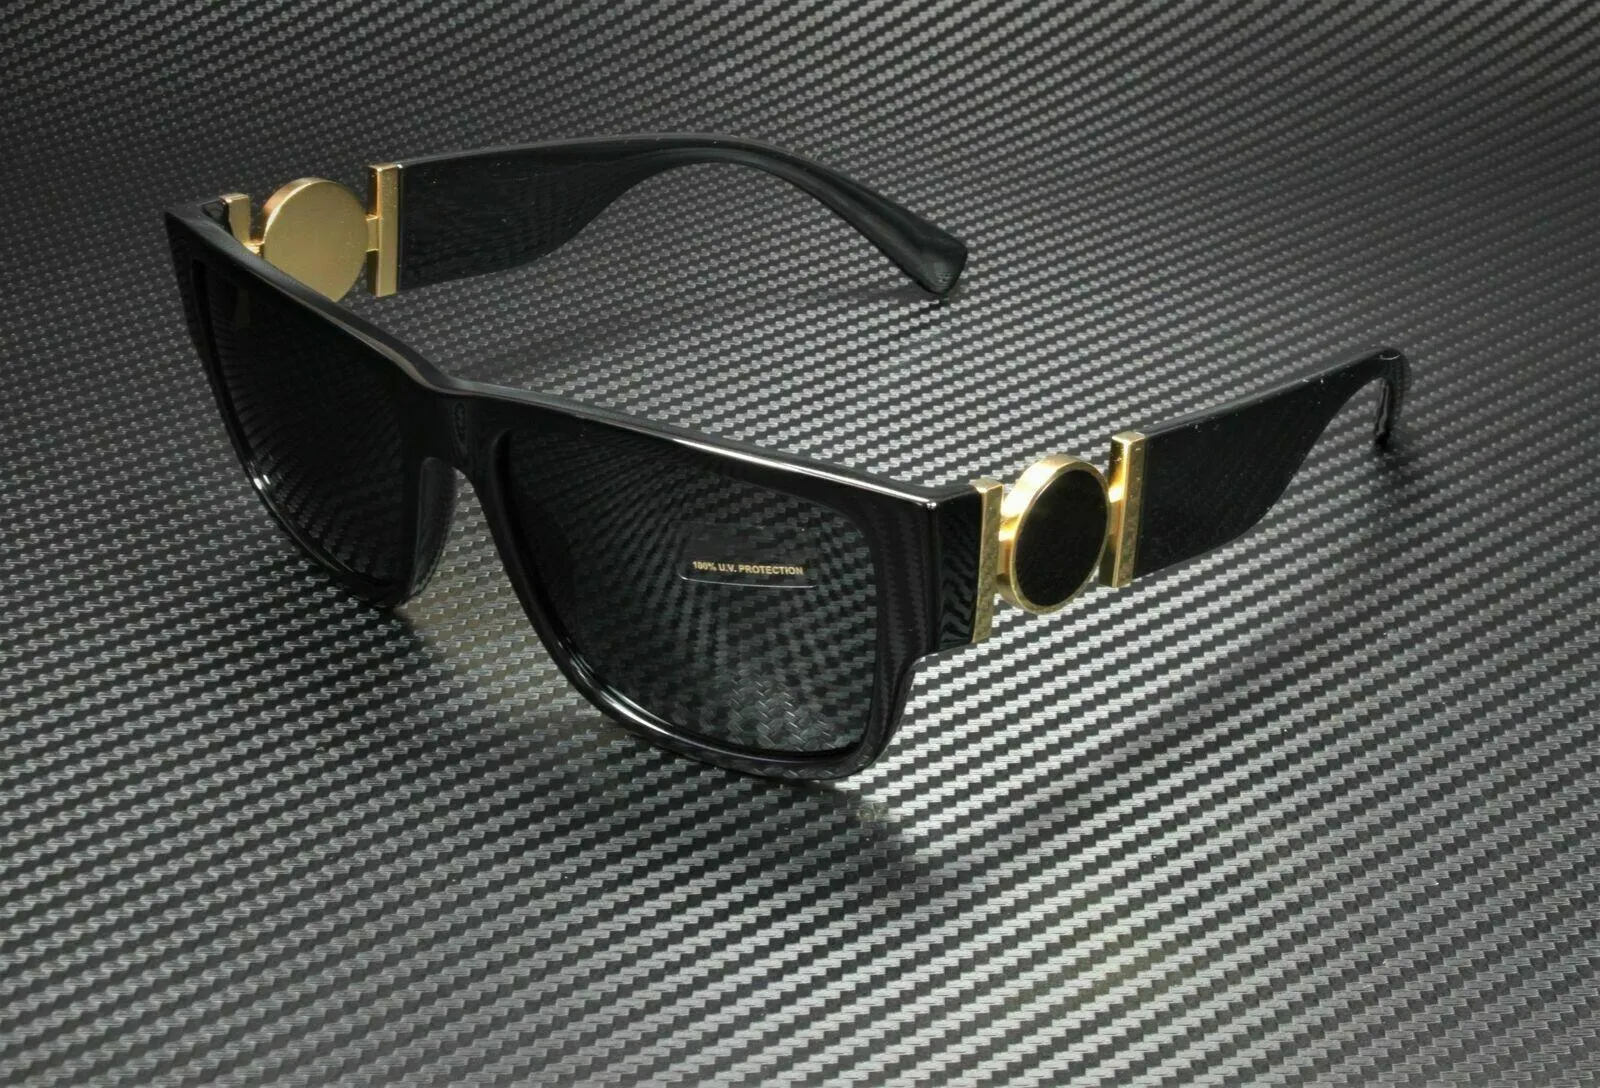 Summer Sunglasses Man Woman Fashion Glasses Square Frame Design Unisex 4369 Black Grey Rectangle Mens Sunglasses UV400 Top Quality233m